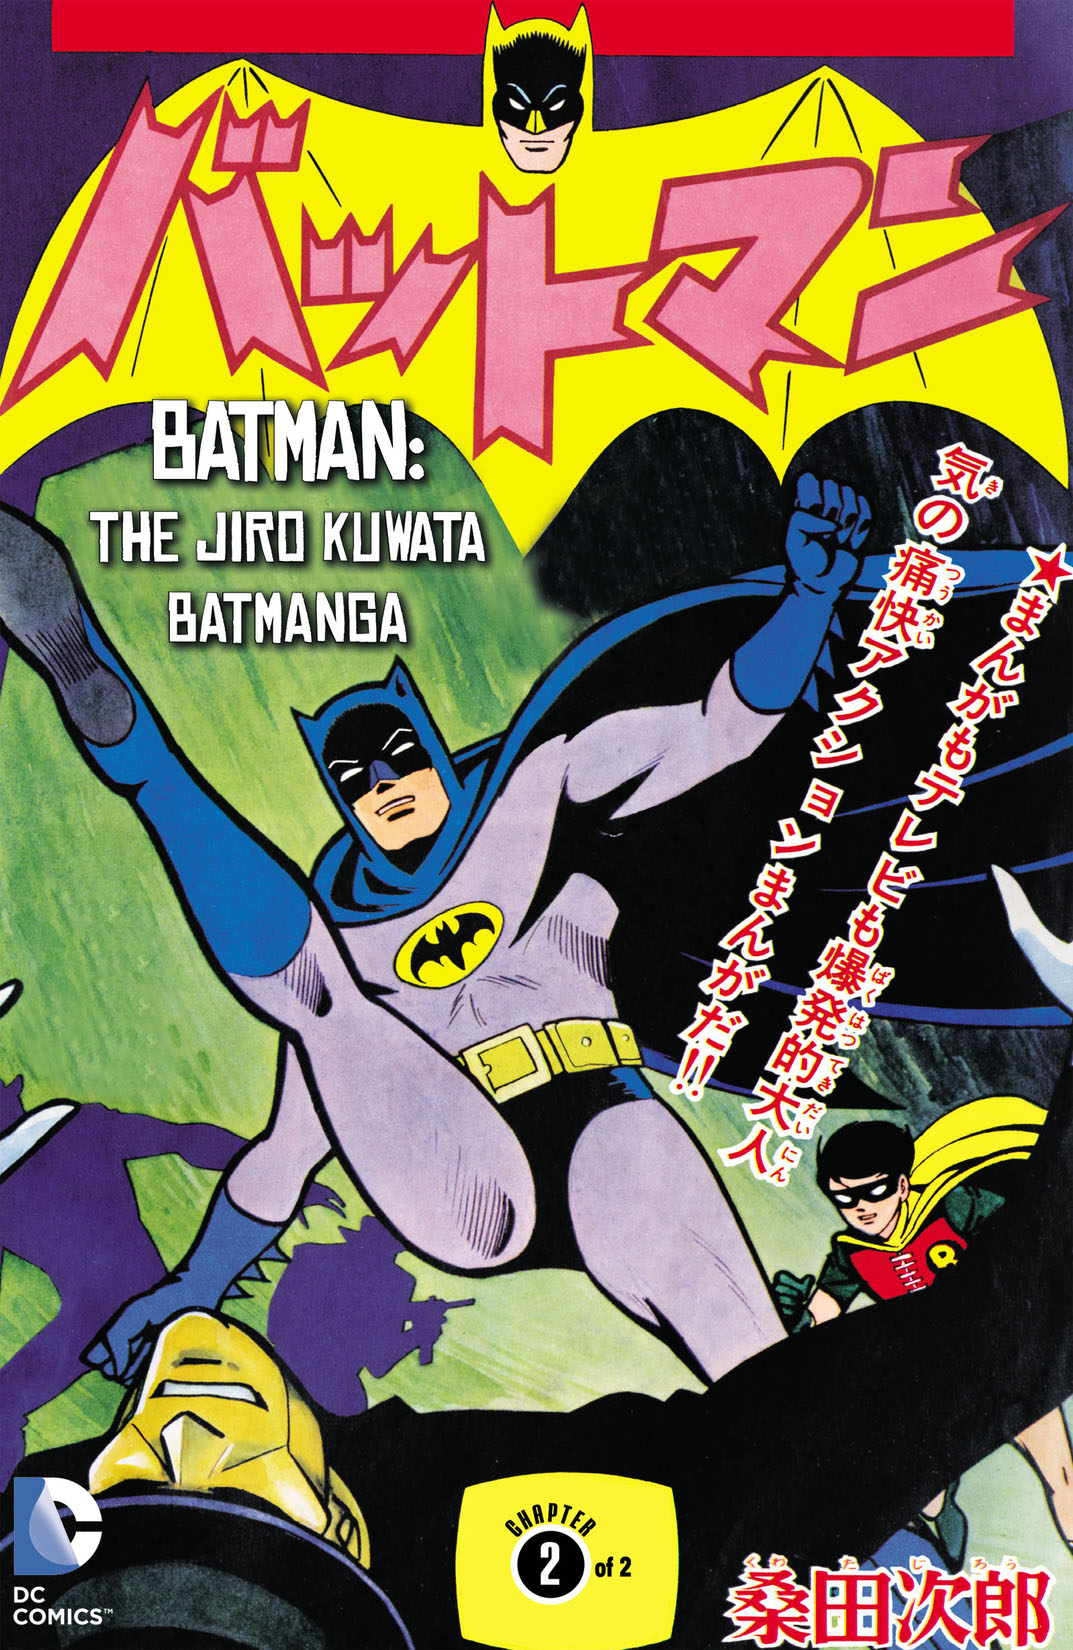 Batman: The Jiro Kuwata Batmanga #47 preview images